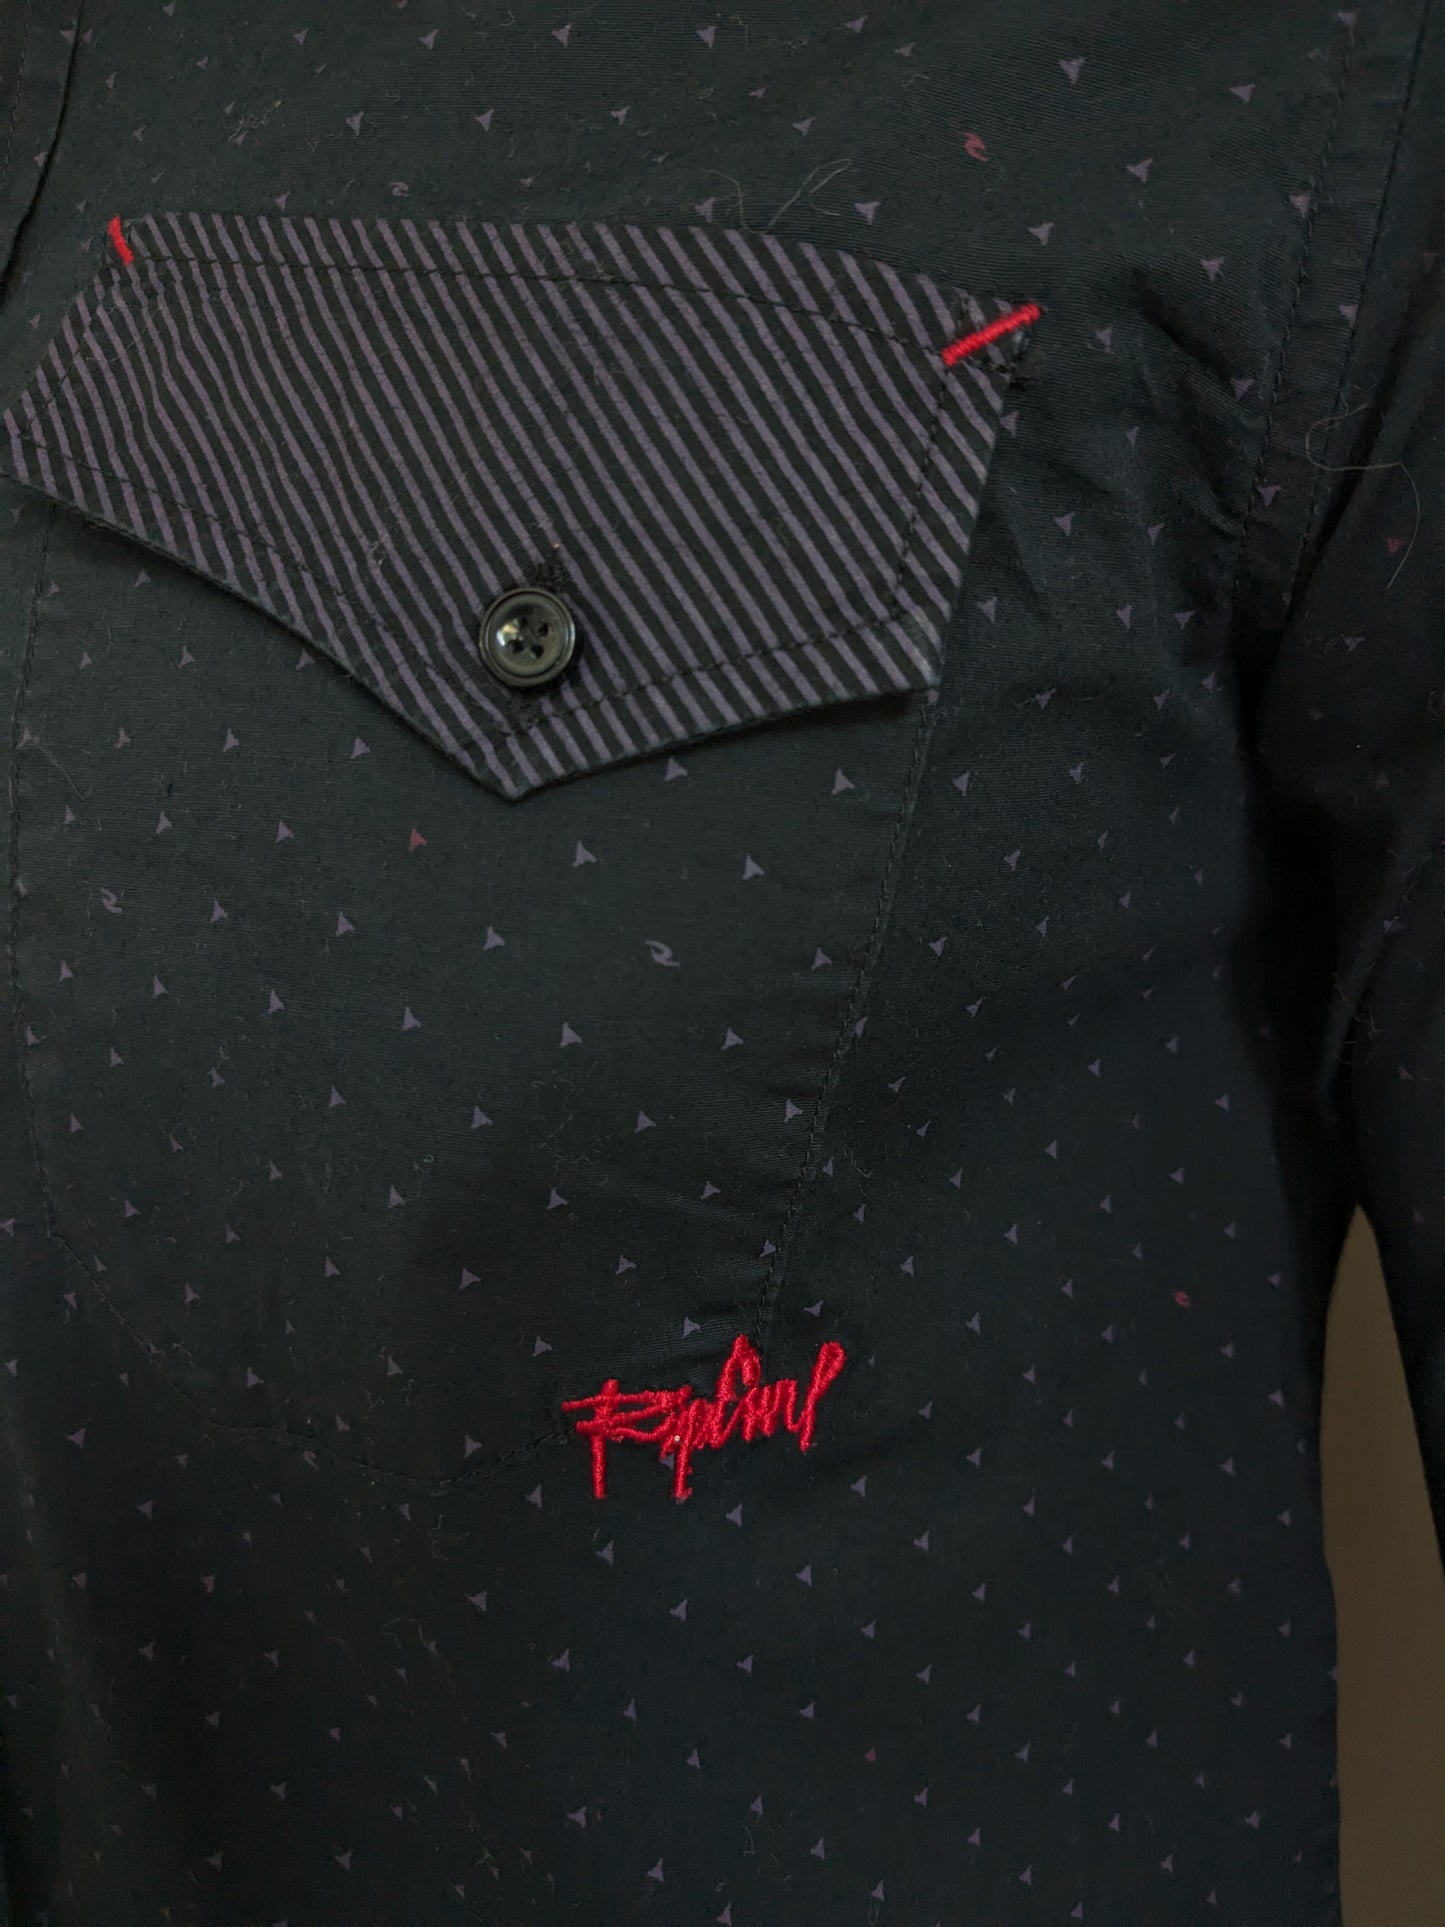 RipCurl overhemd. Zwart Paarse print met rode borduursels / stiksels. Maat M.